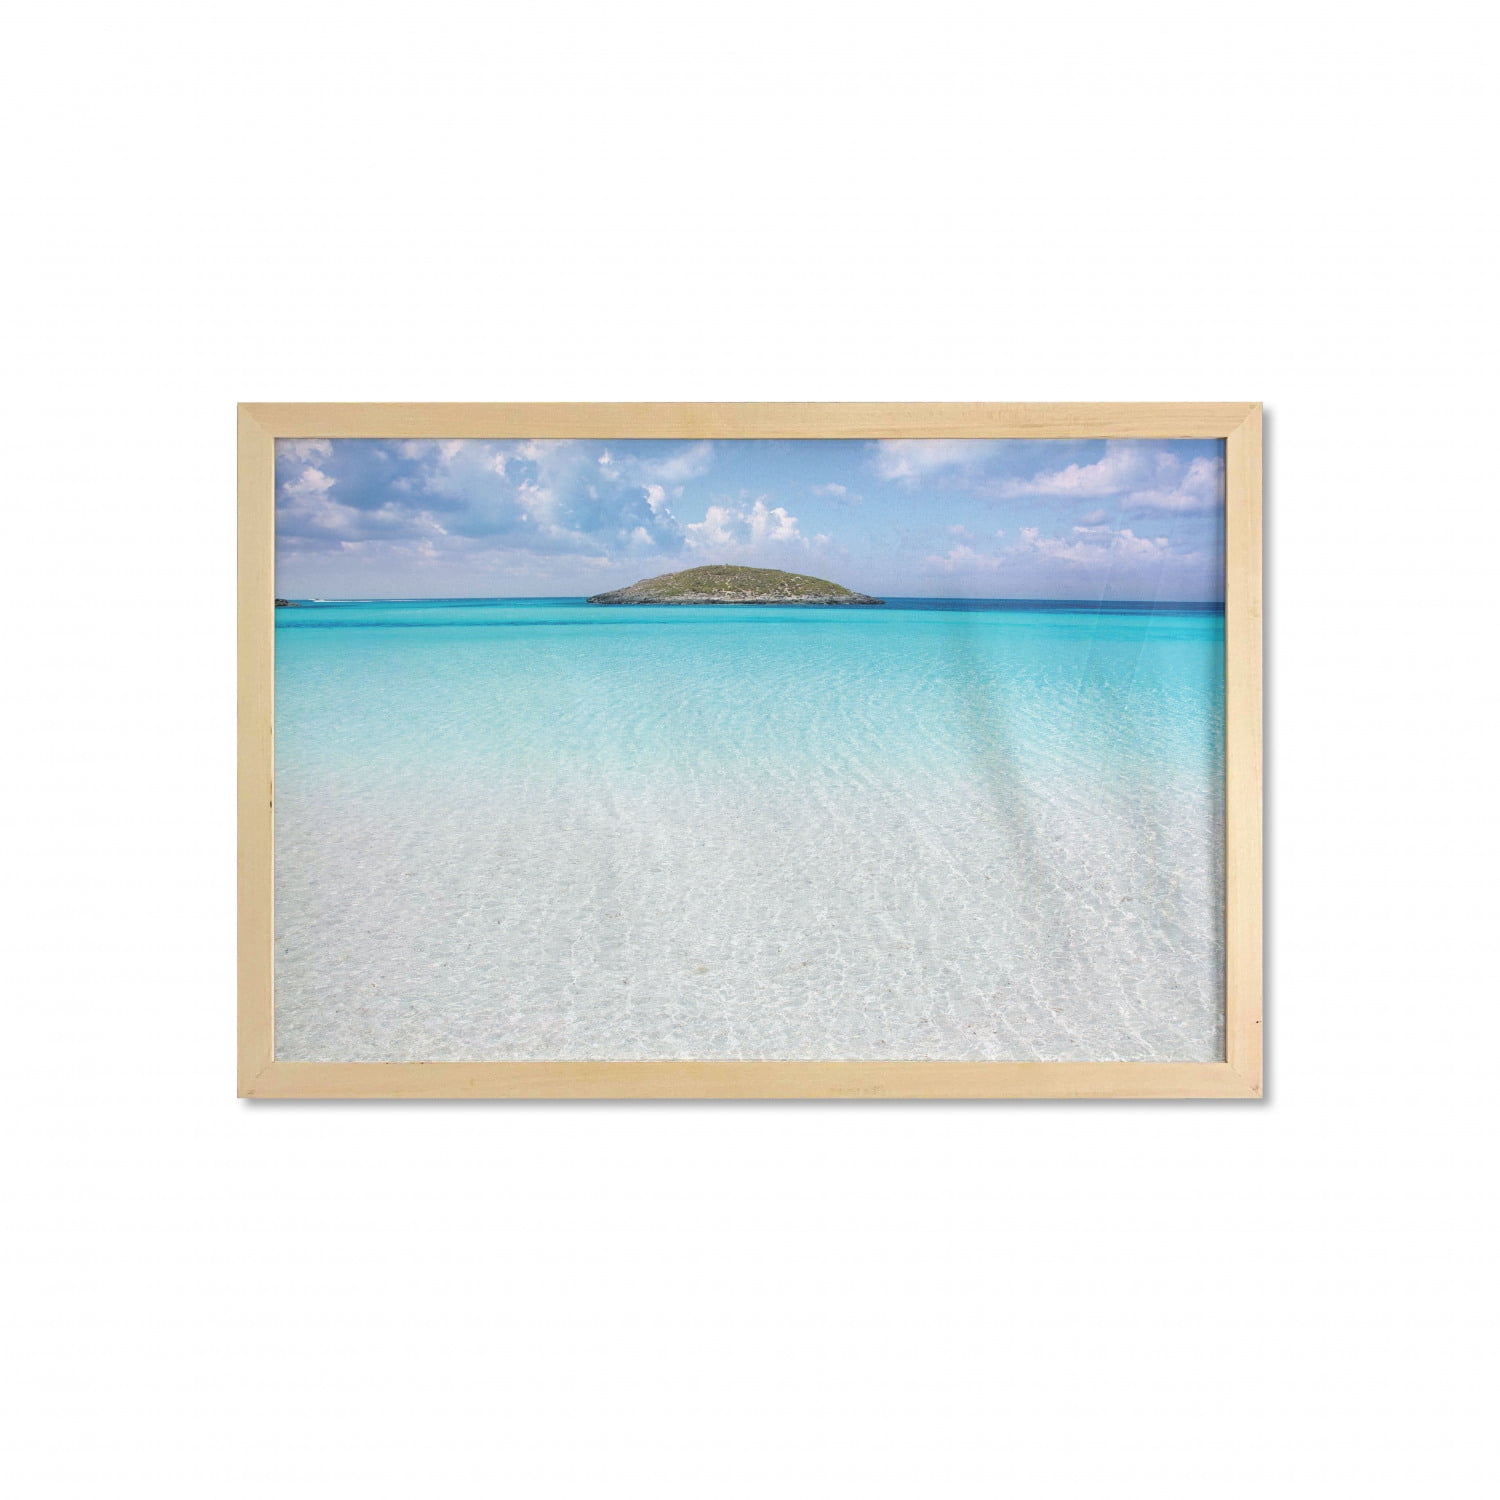 D Caribbean Turquoise Beach Perfect Sea Art Print Home Decor Wall Art Poster